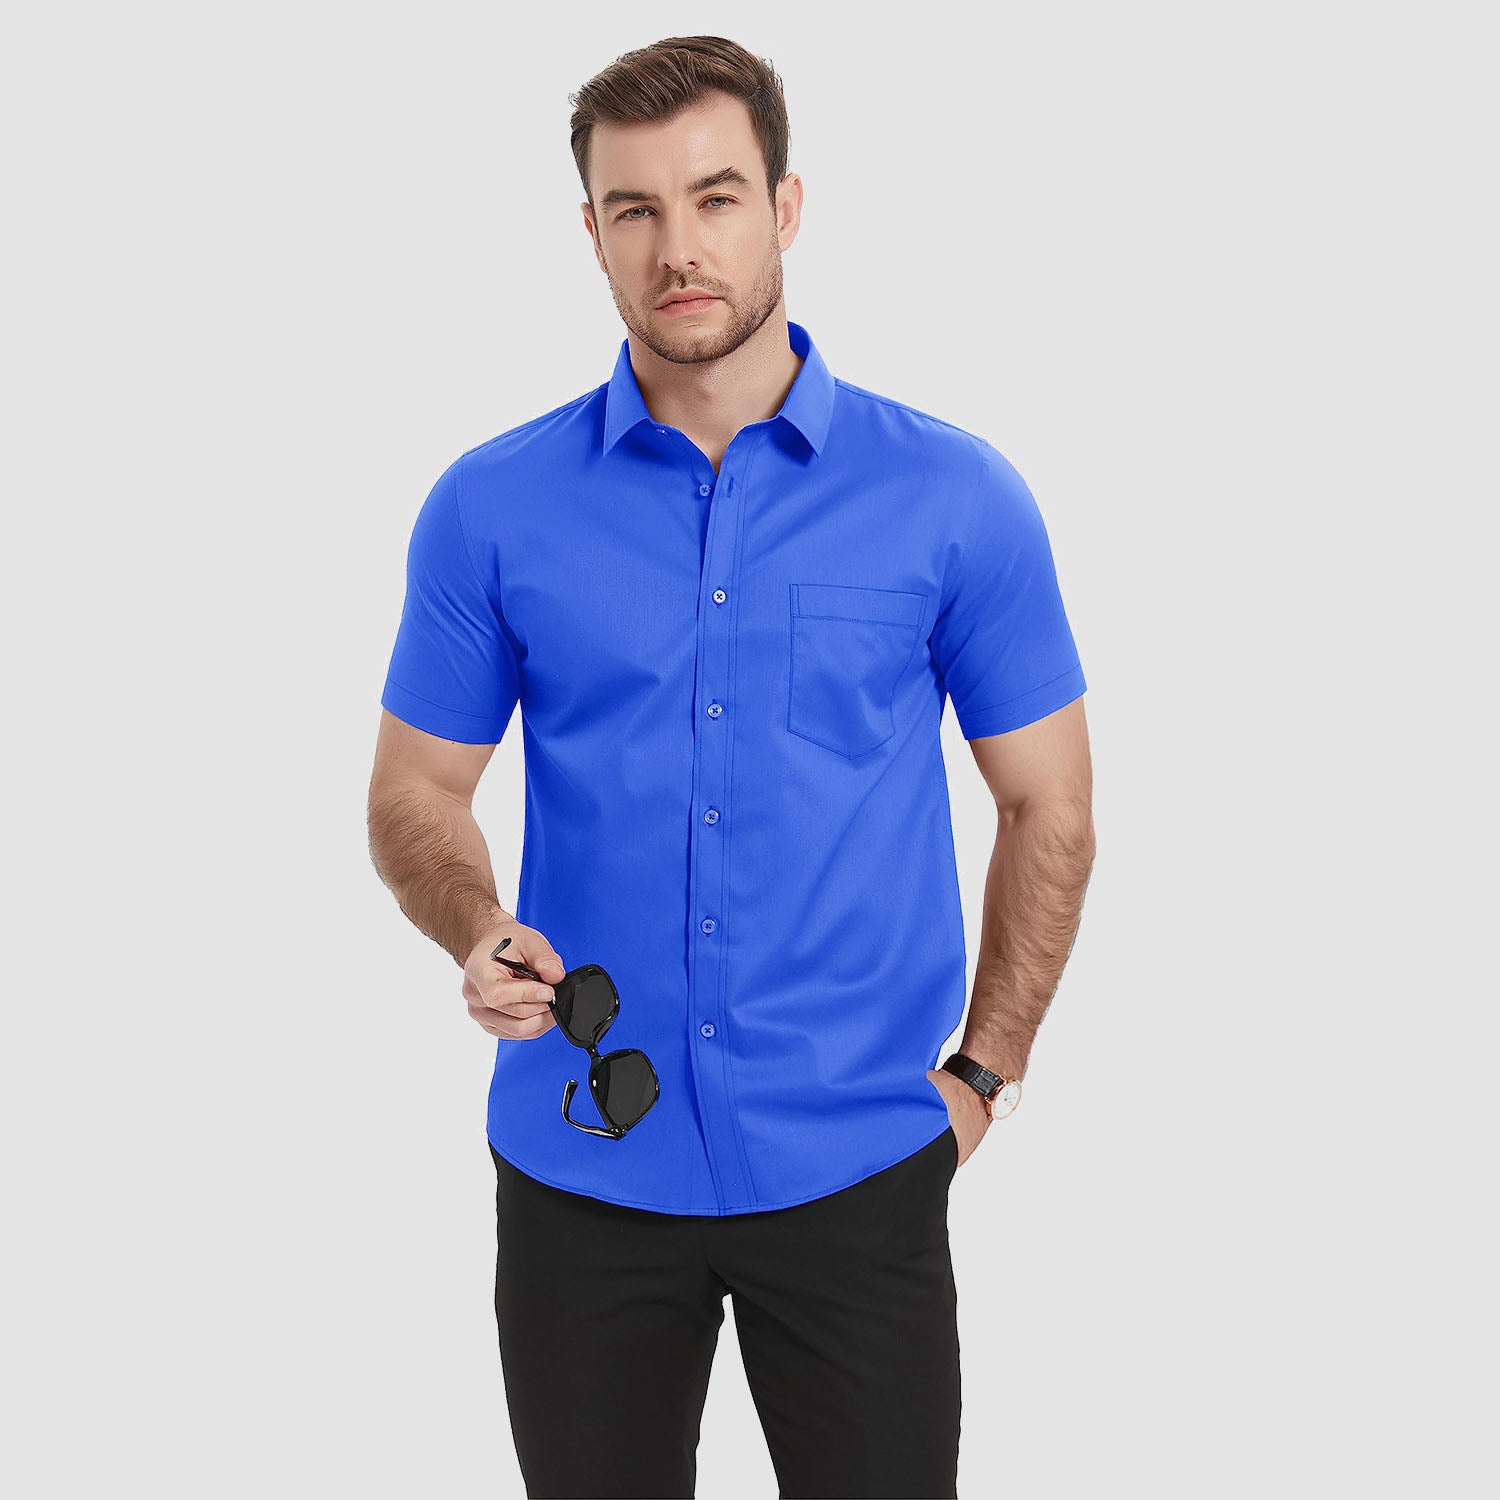 Men's Dress Shirts Short Sleeve with Pocket Cotton Regular Fit Business Shirts